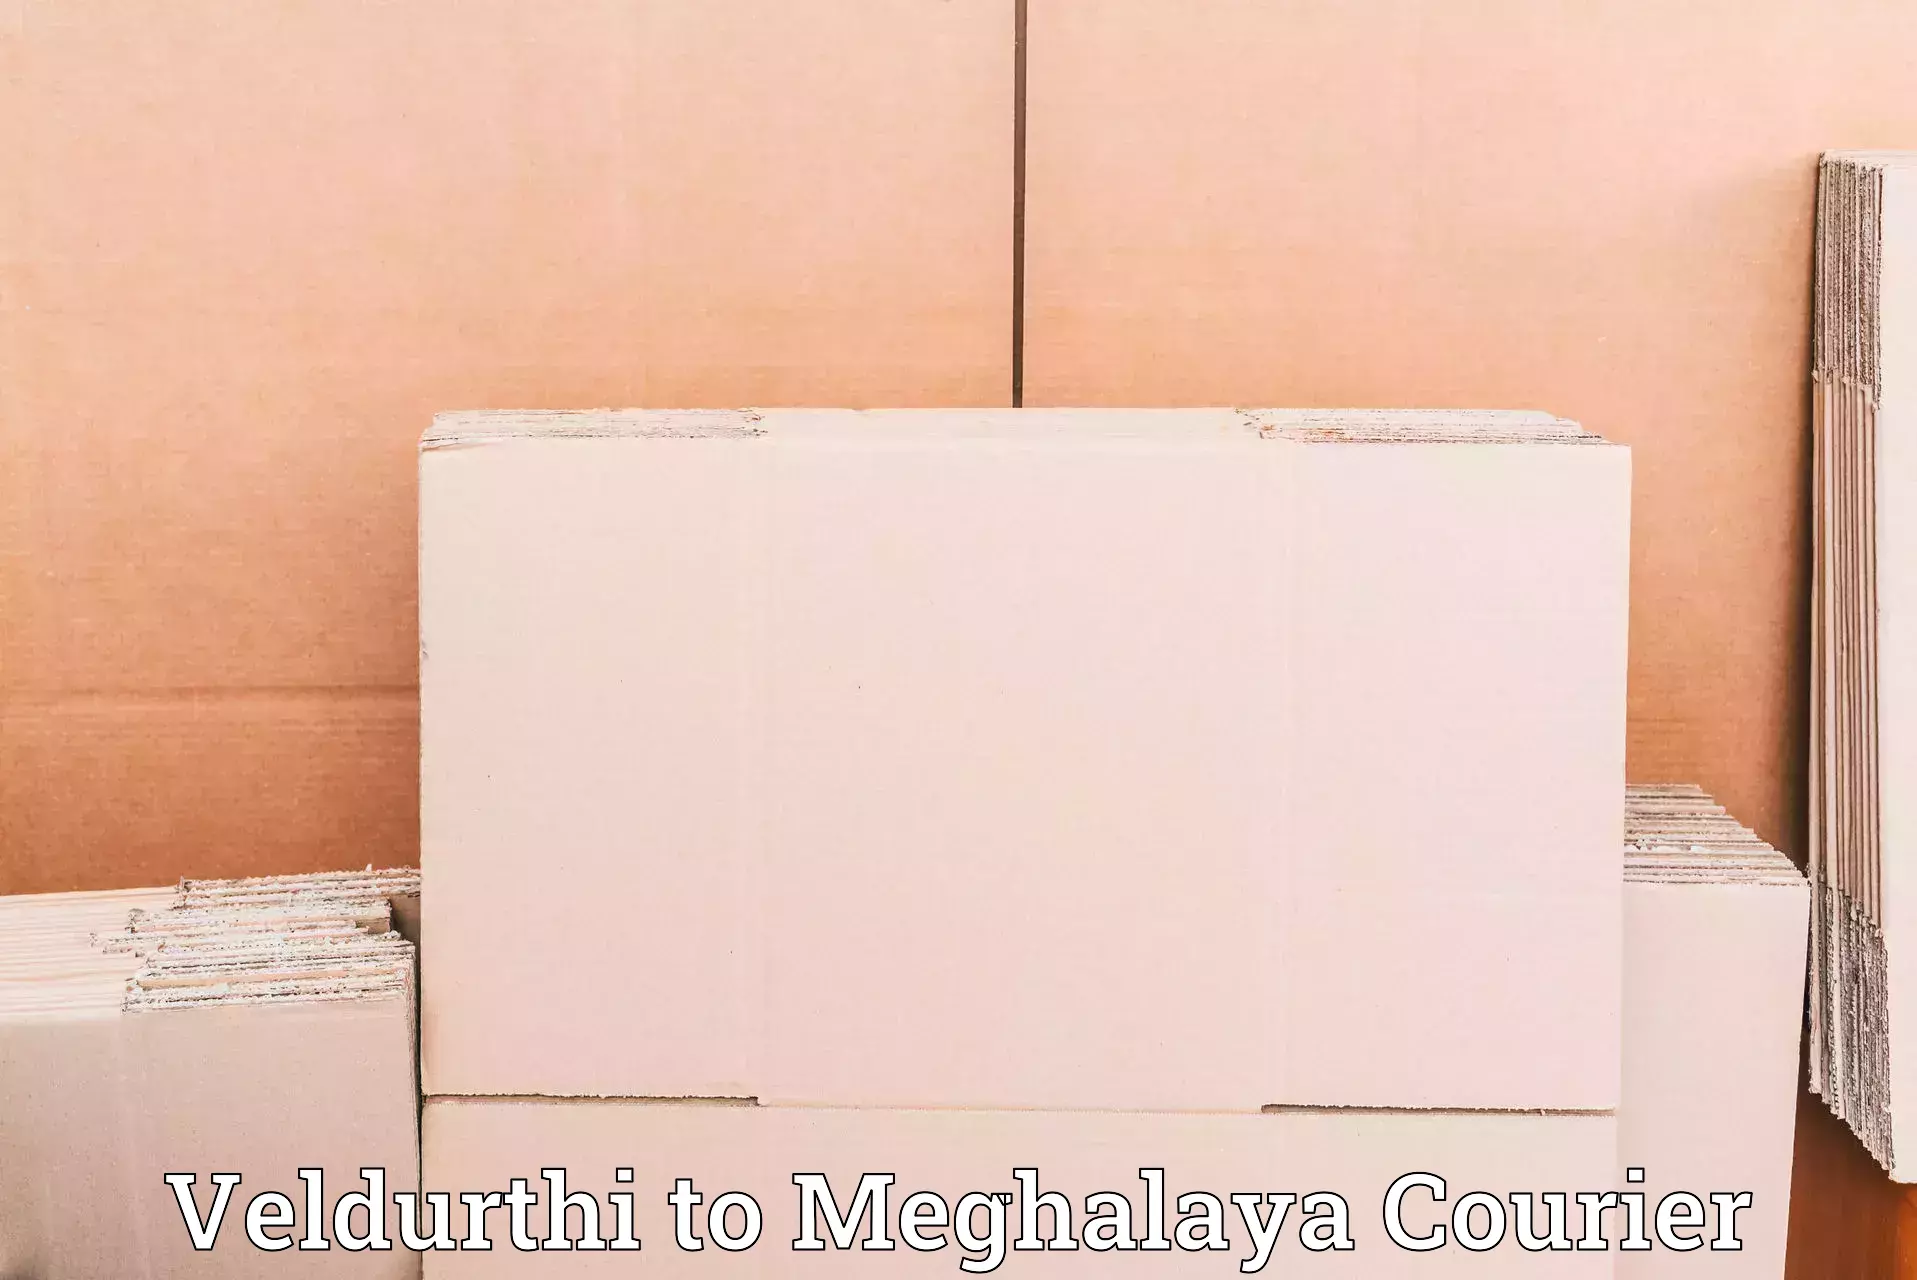 State-of-the-art courier technology Veldurthi to Meghalaya